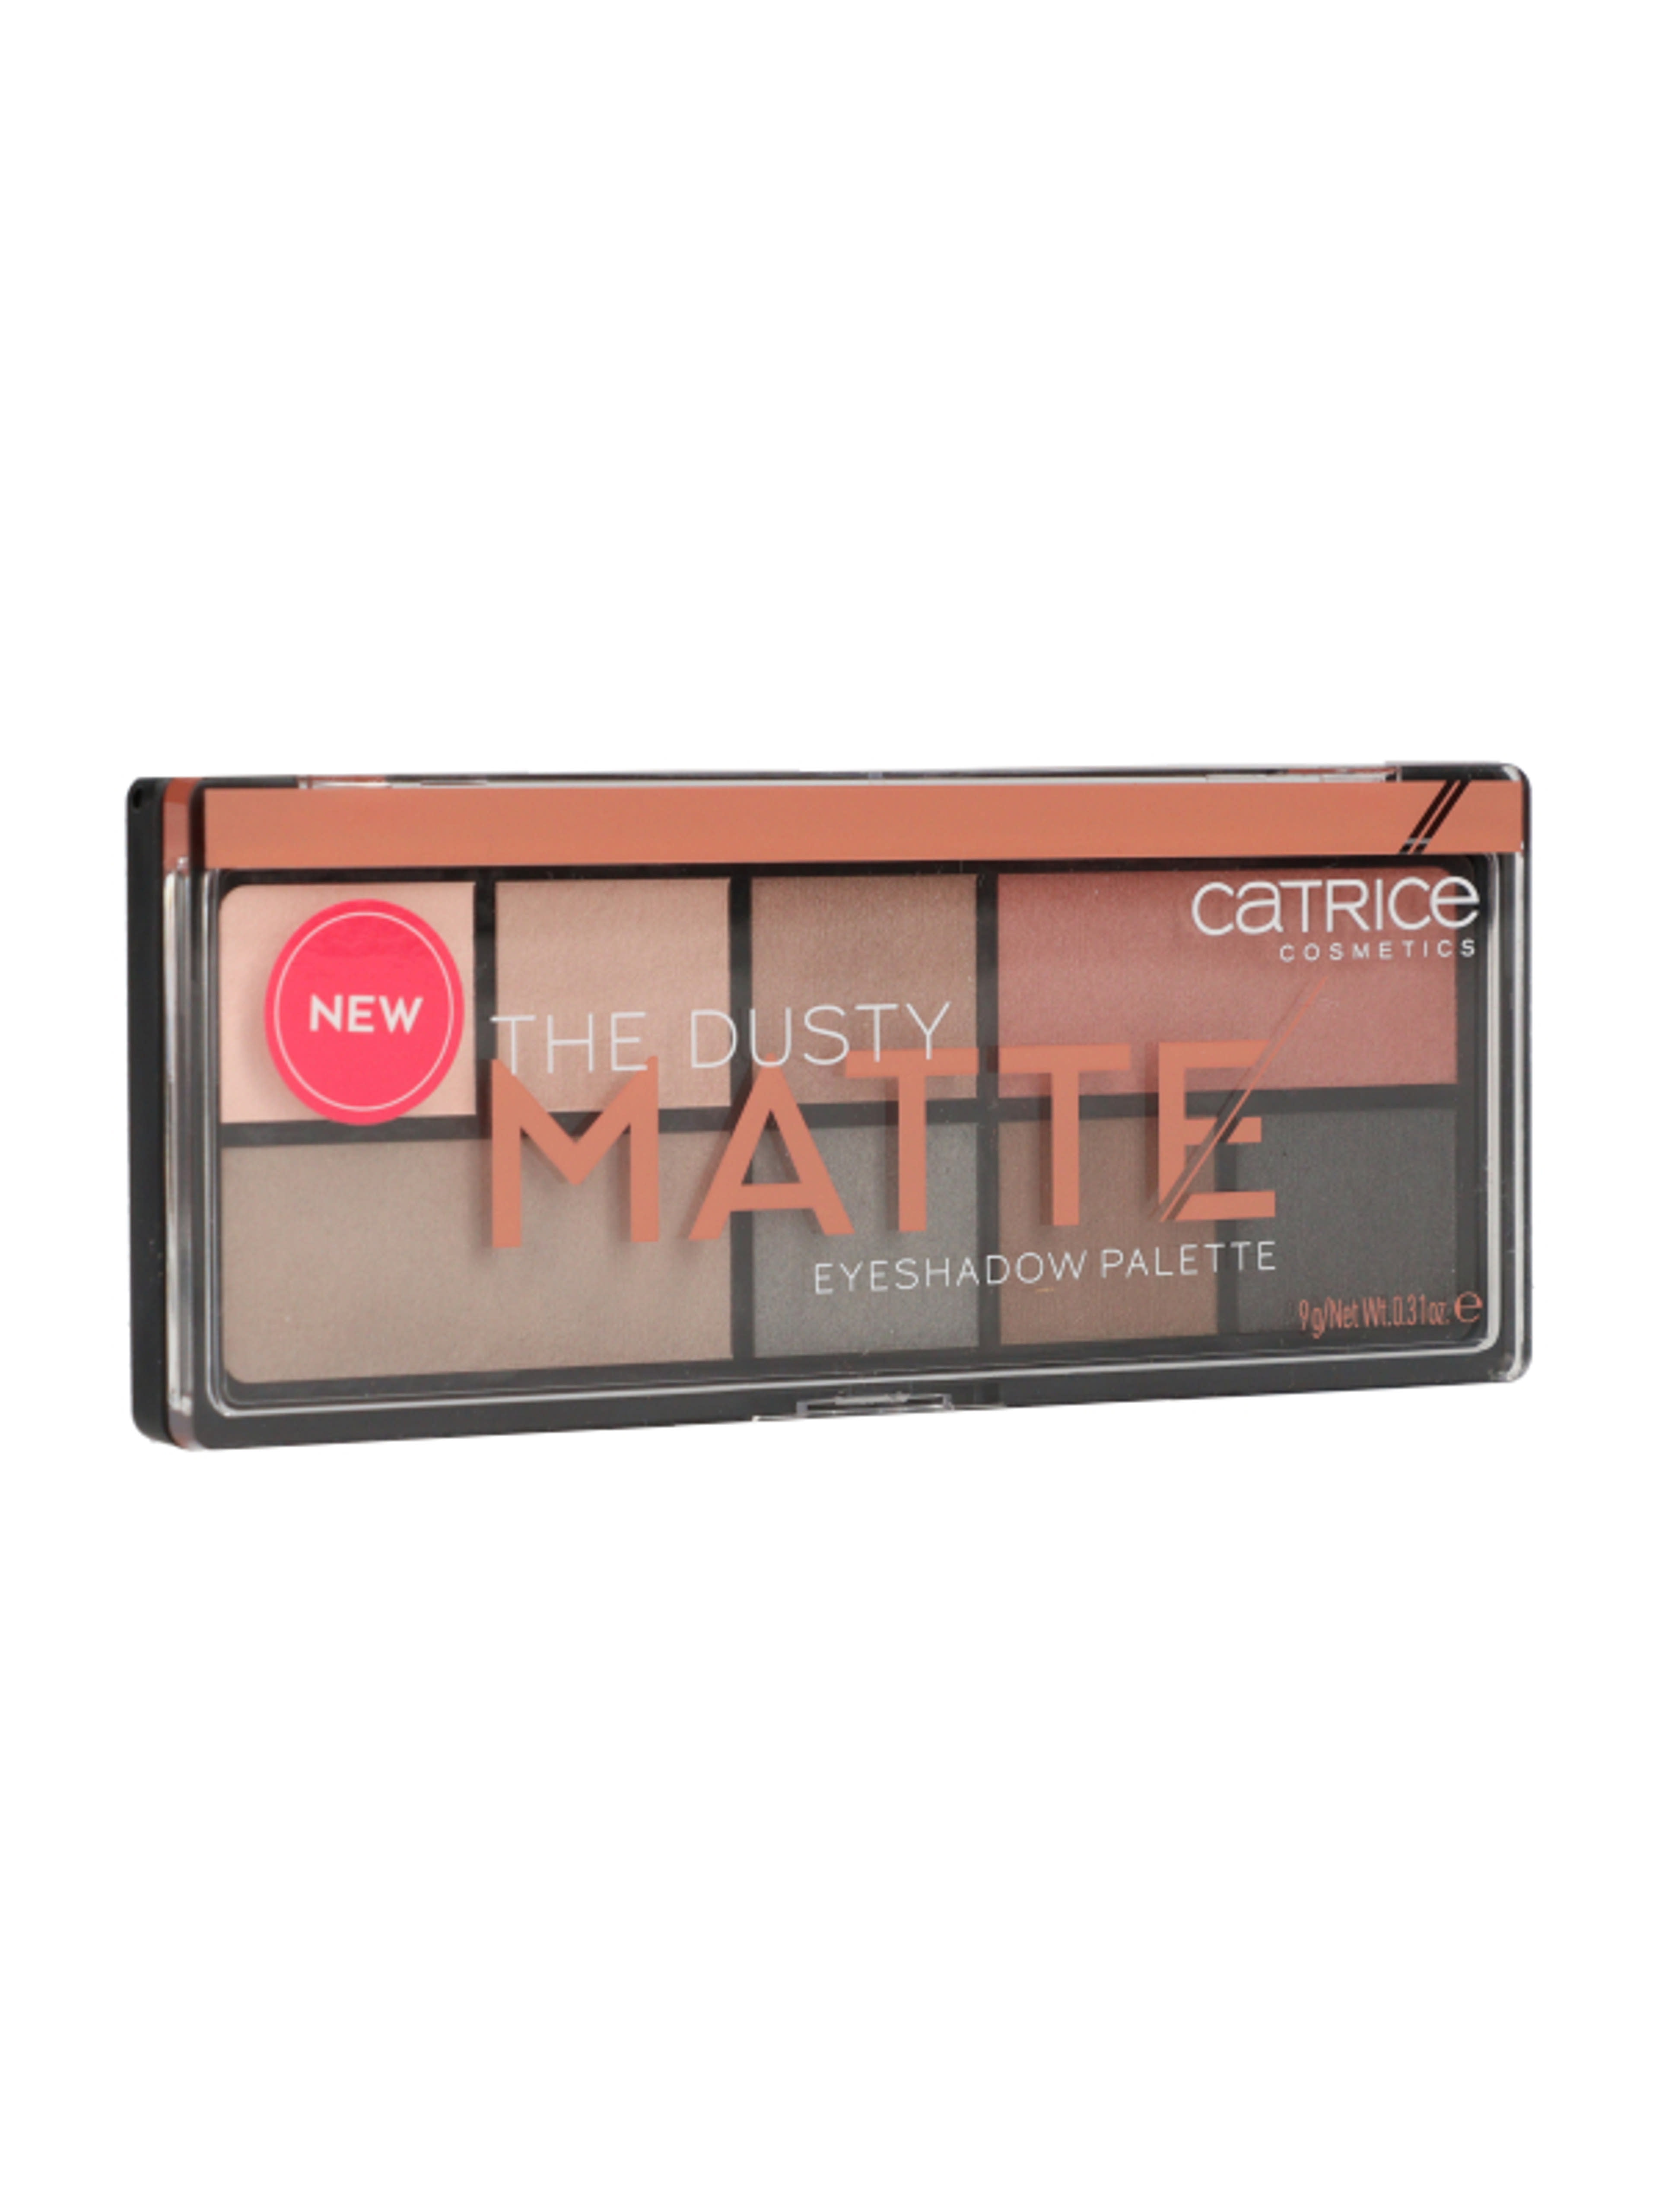 Catrice The Dusty Matte szemhéjpúder paletta - 1 db-4